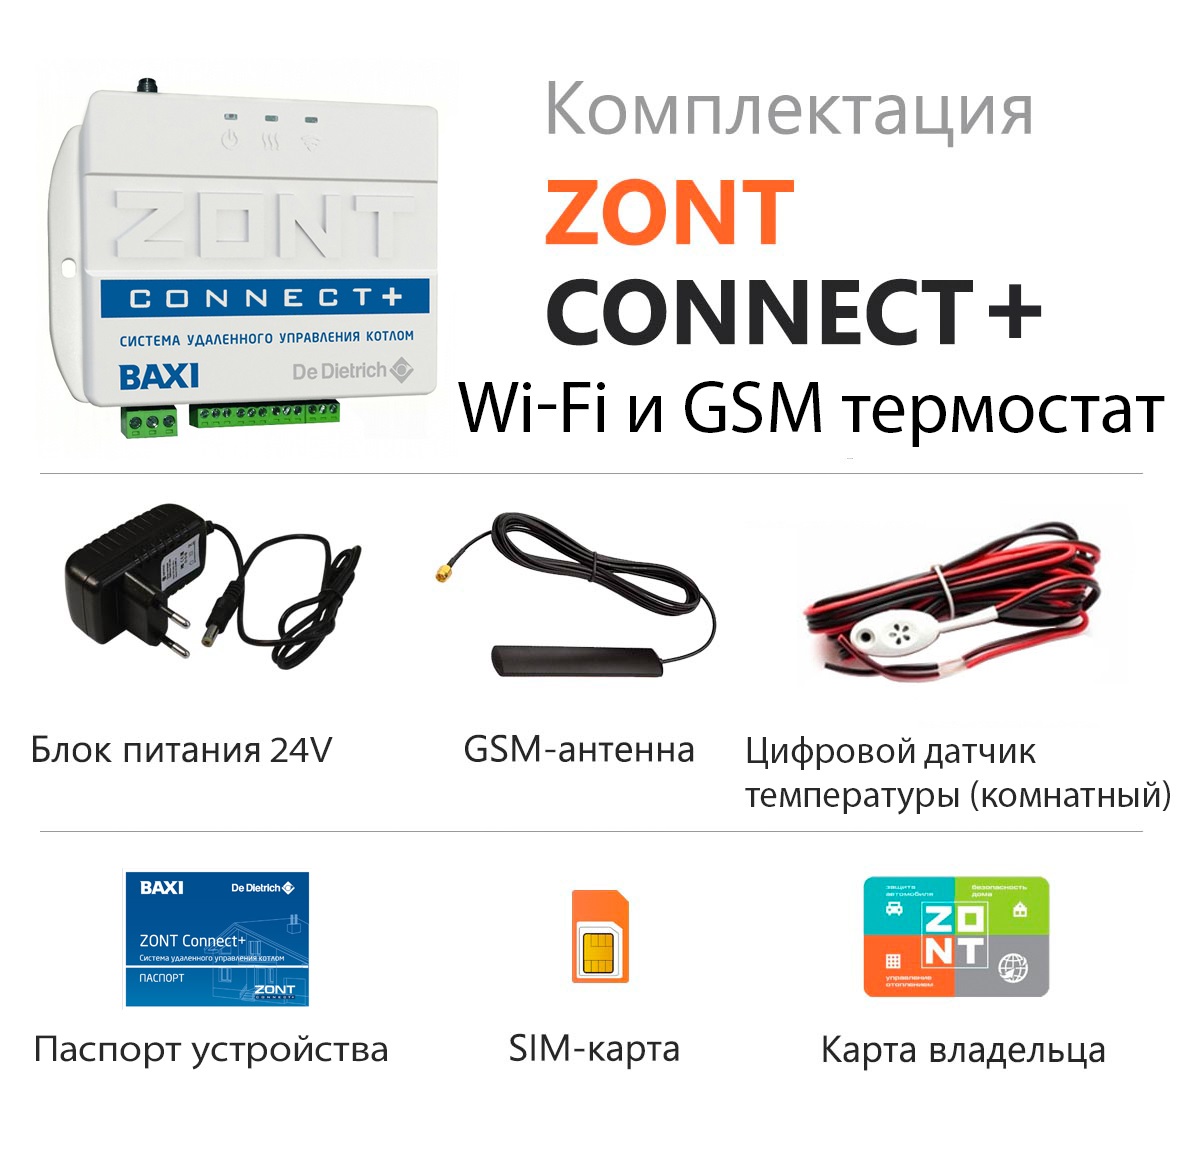 GSM/Wifi термостат ZONT Connect+  (BAXI De Dietrich) (отдельно выписать арт. KHG7140725